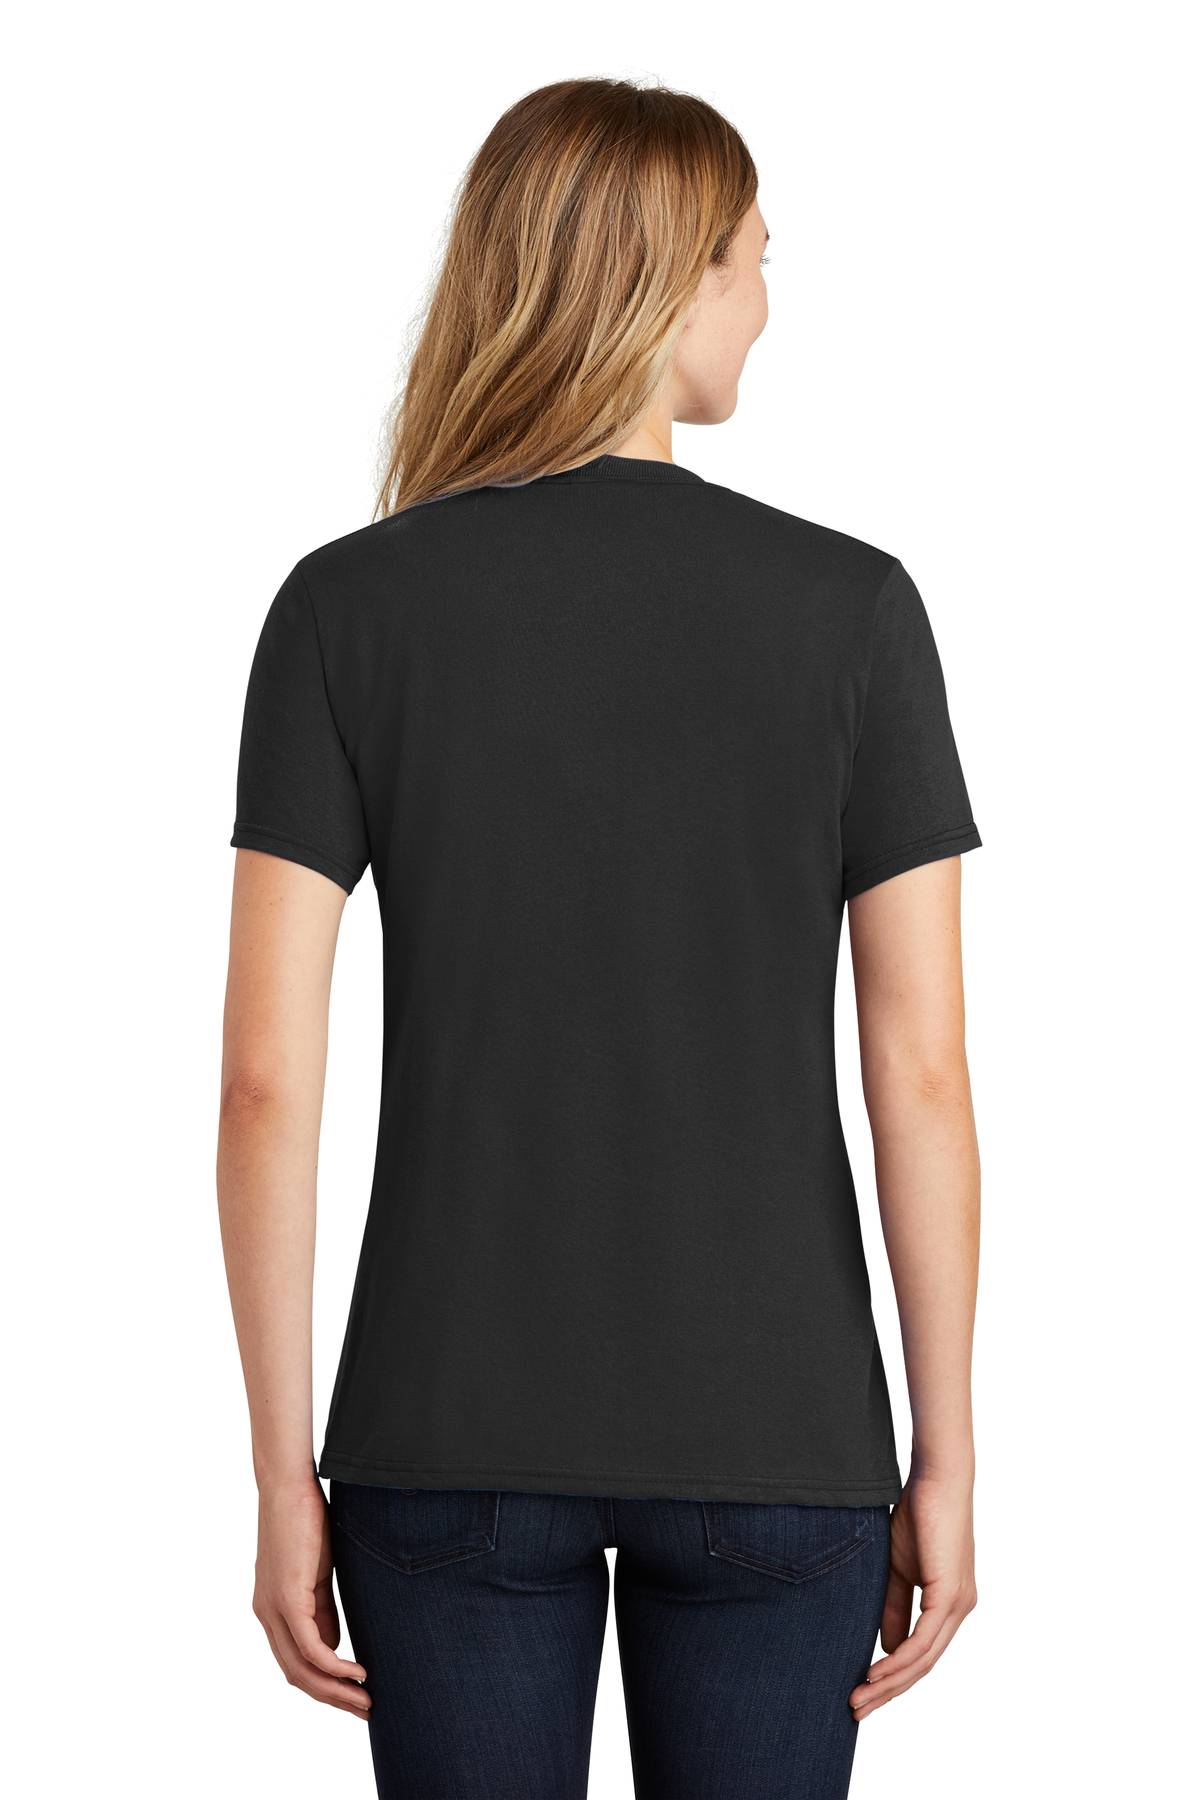 Cleveland Cavaliers Levelwear Women's Lux Core T Shirt Heather Black -  Limotees